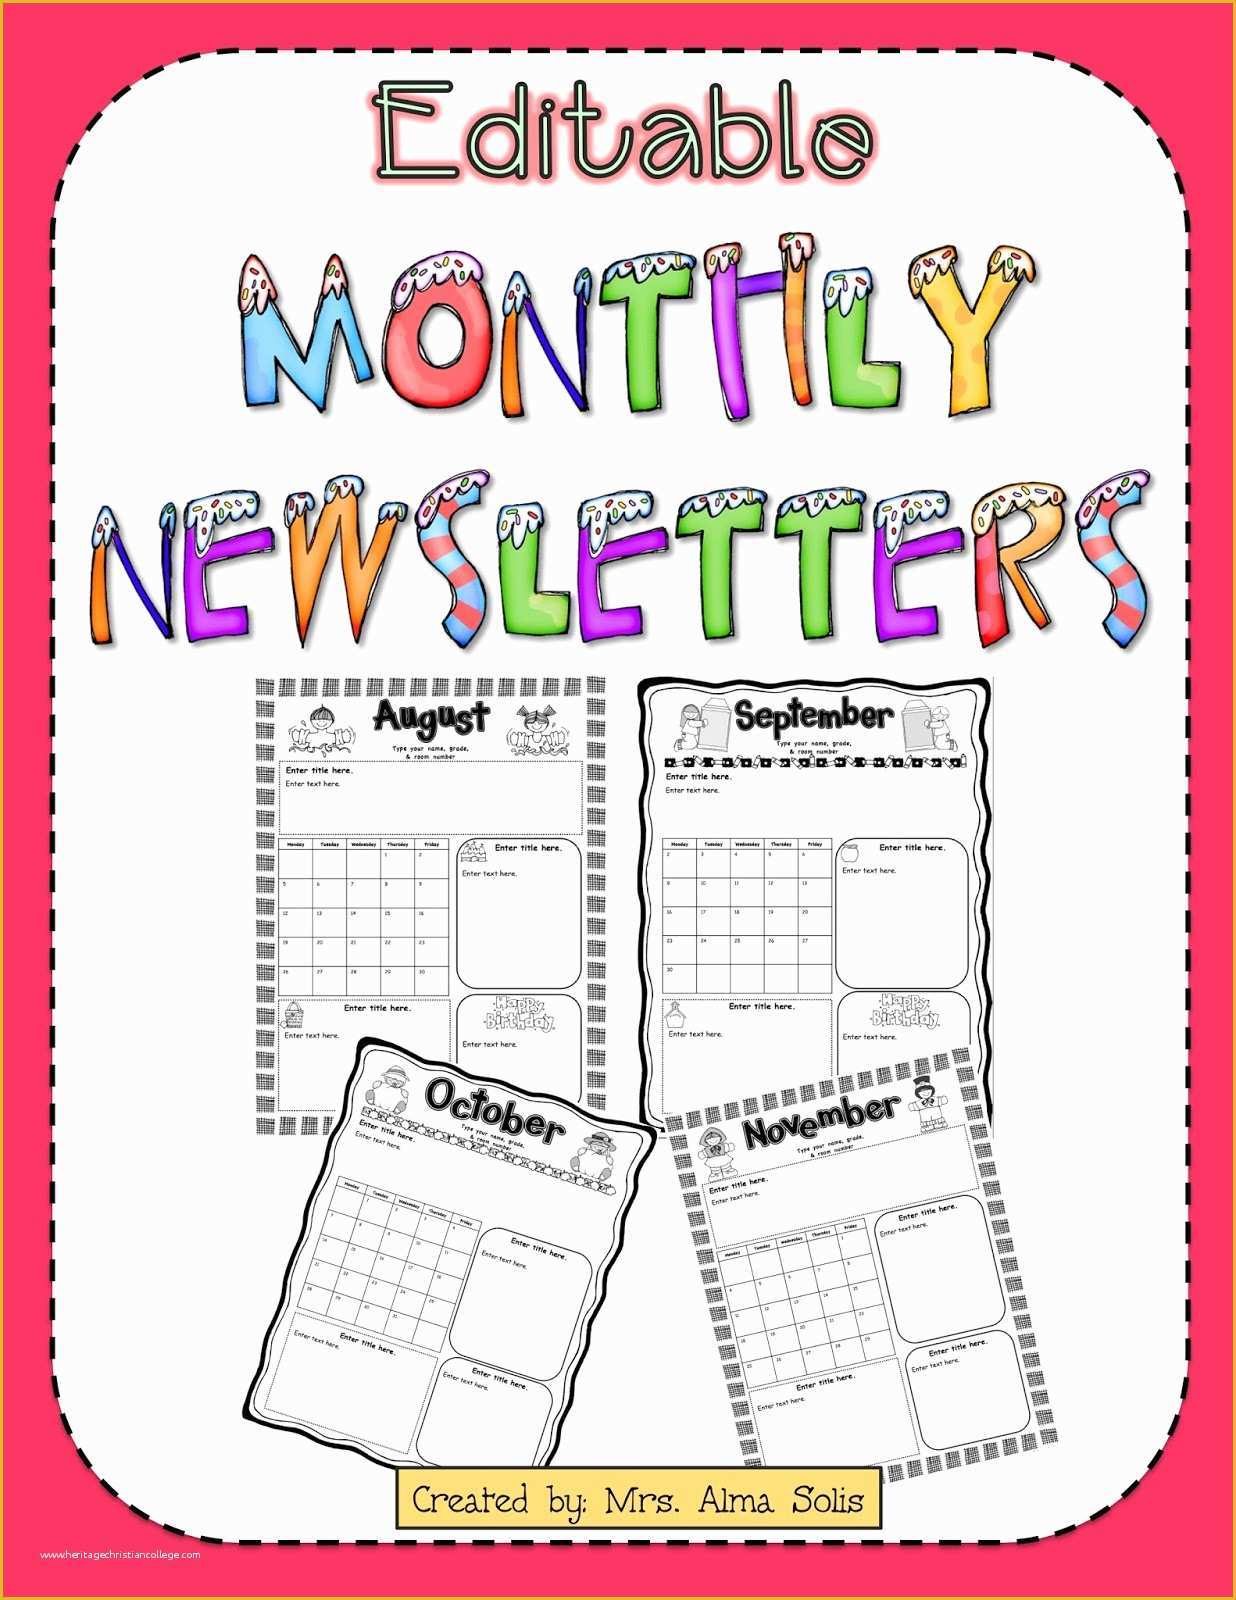 Preschool Newsletter Template Editable Free Of Mrs solis S Teaching Treasures Monthly Newsletters